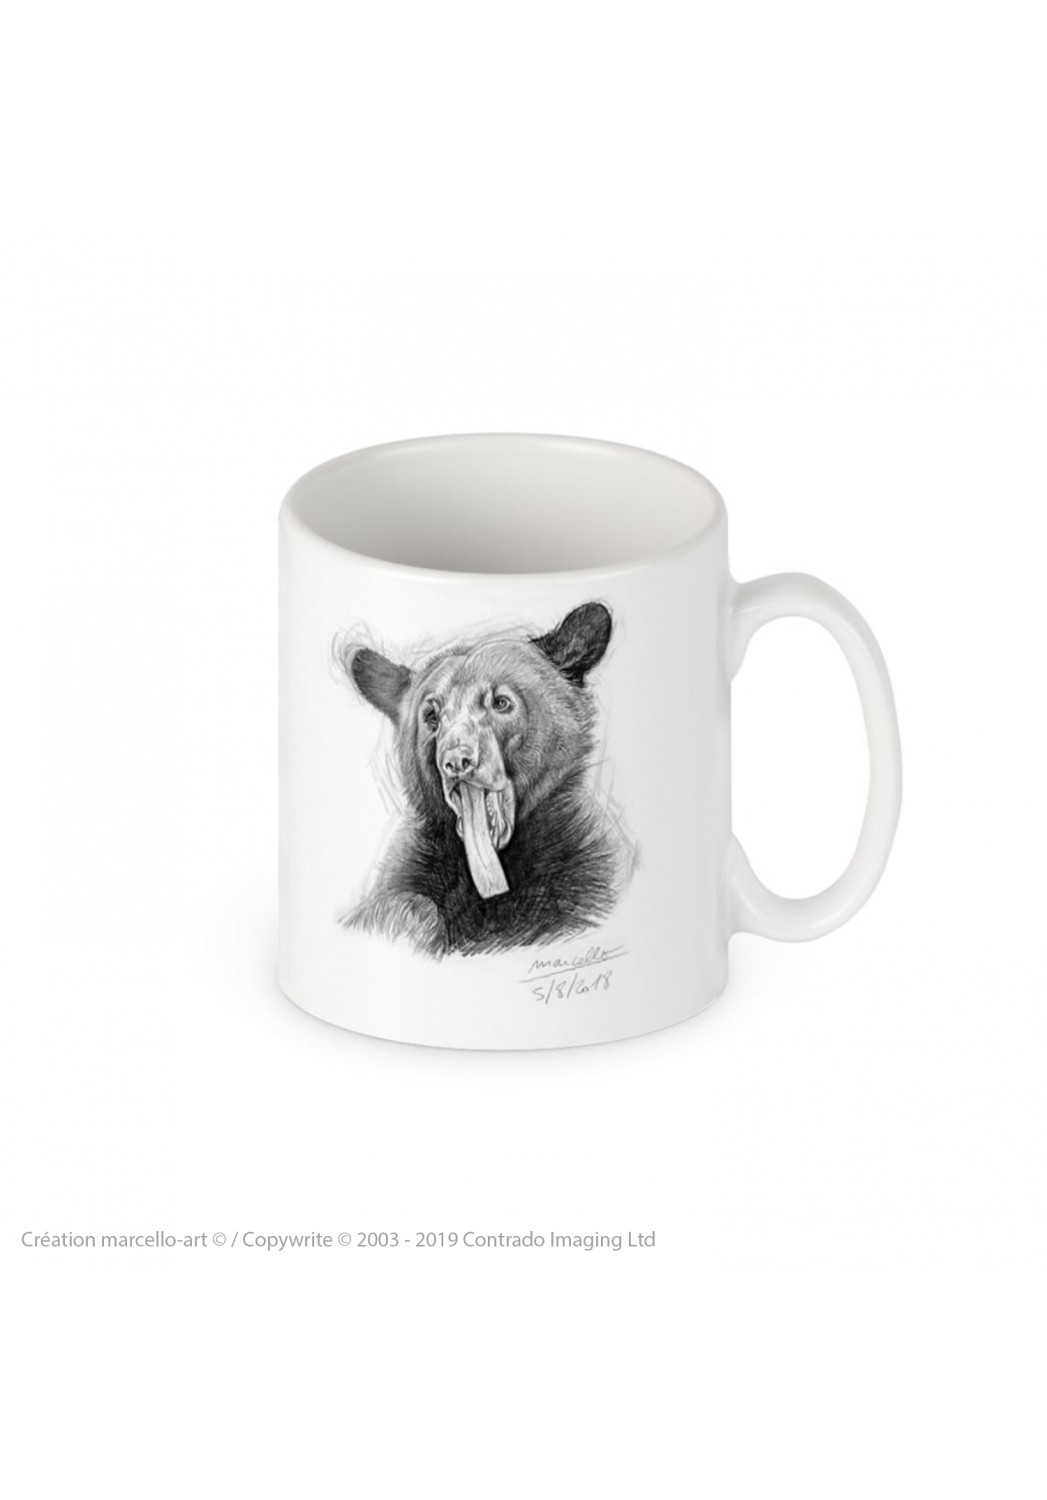 Marcello-art: Decoration accessoiries Porcelain mug 382 black bear tongue